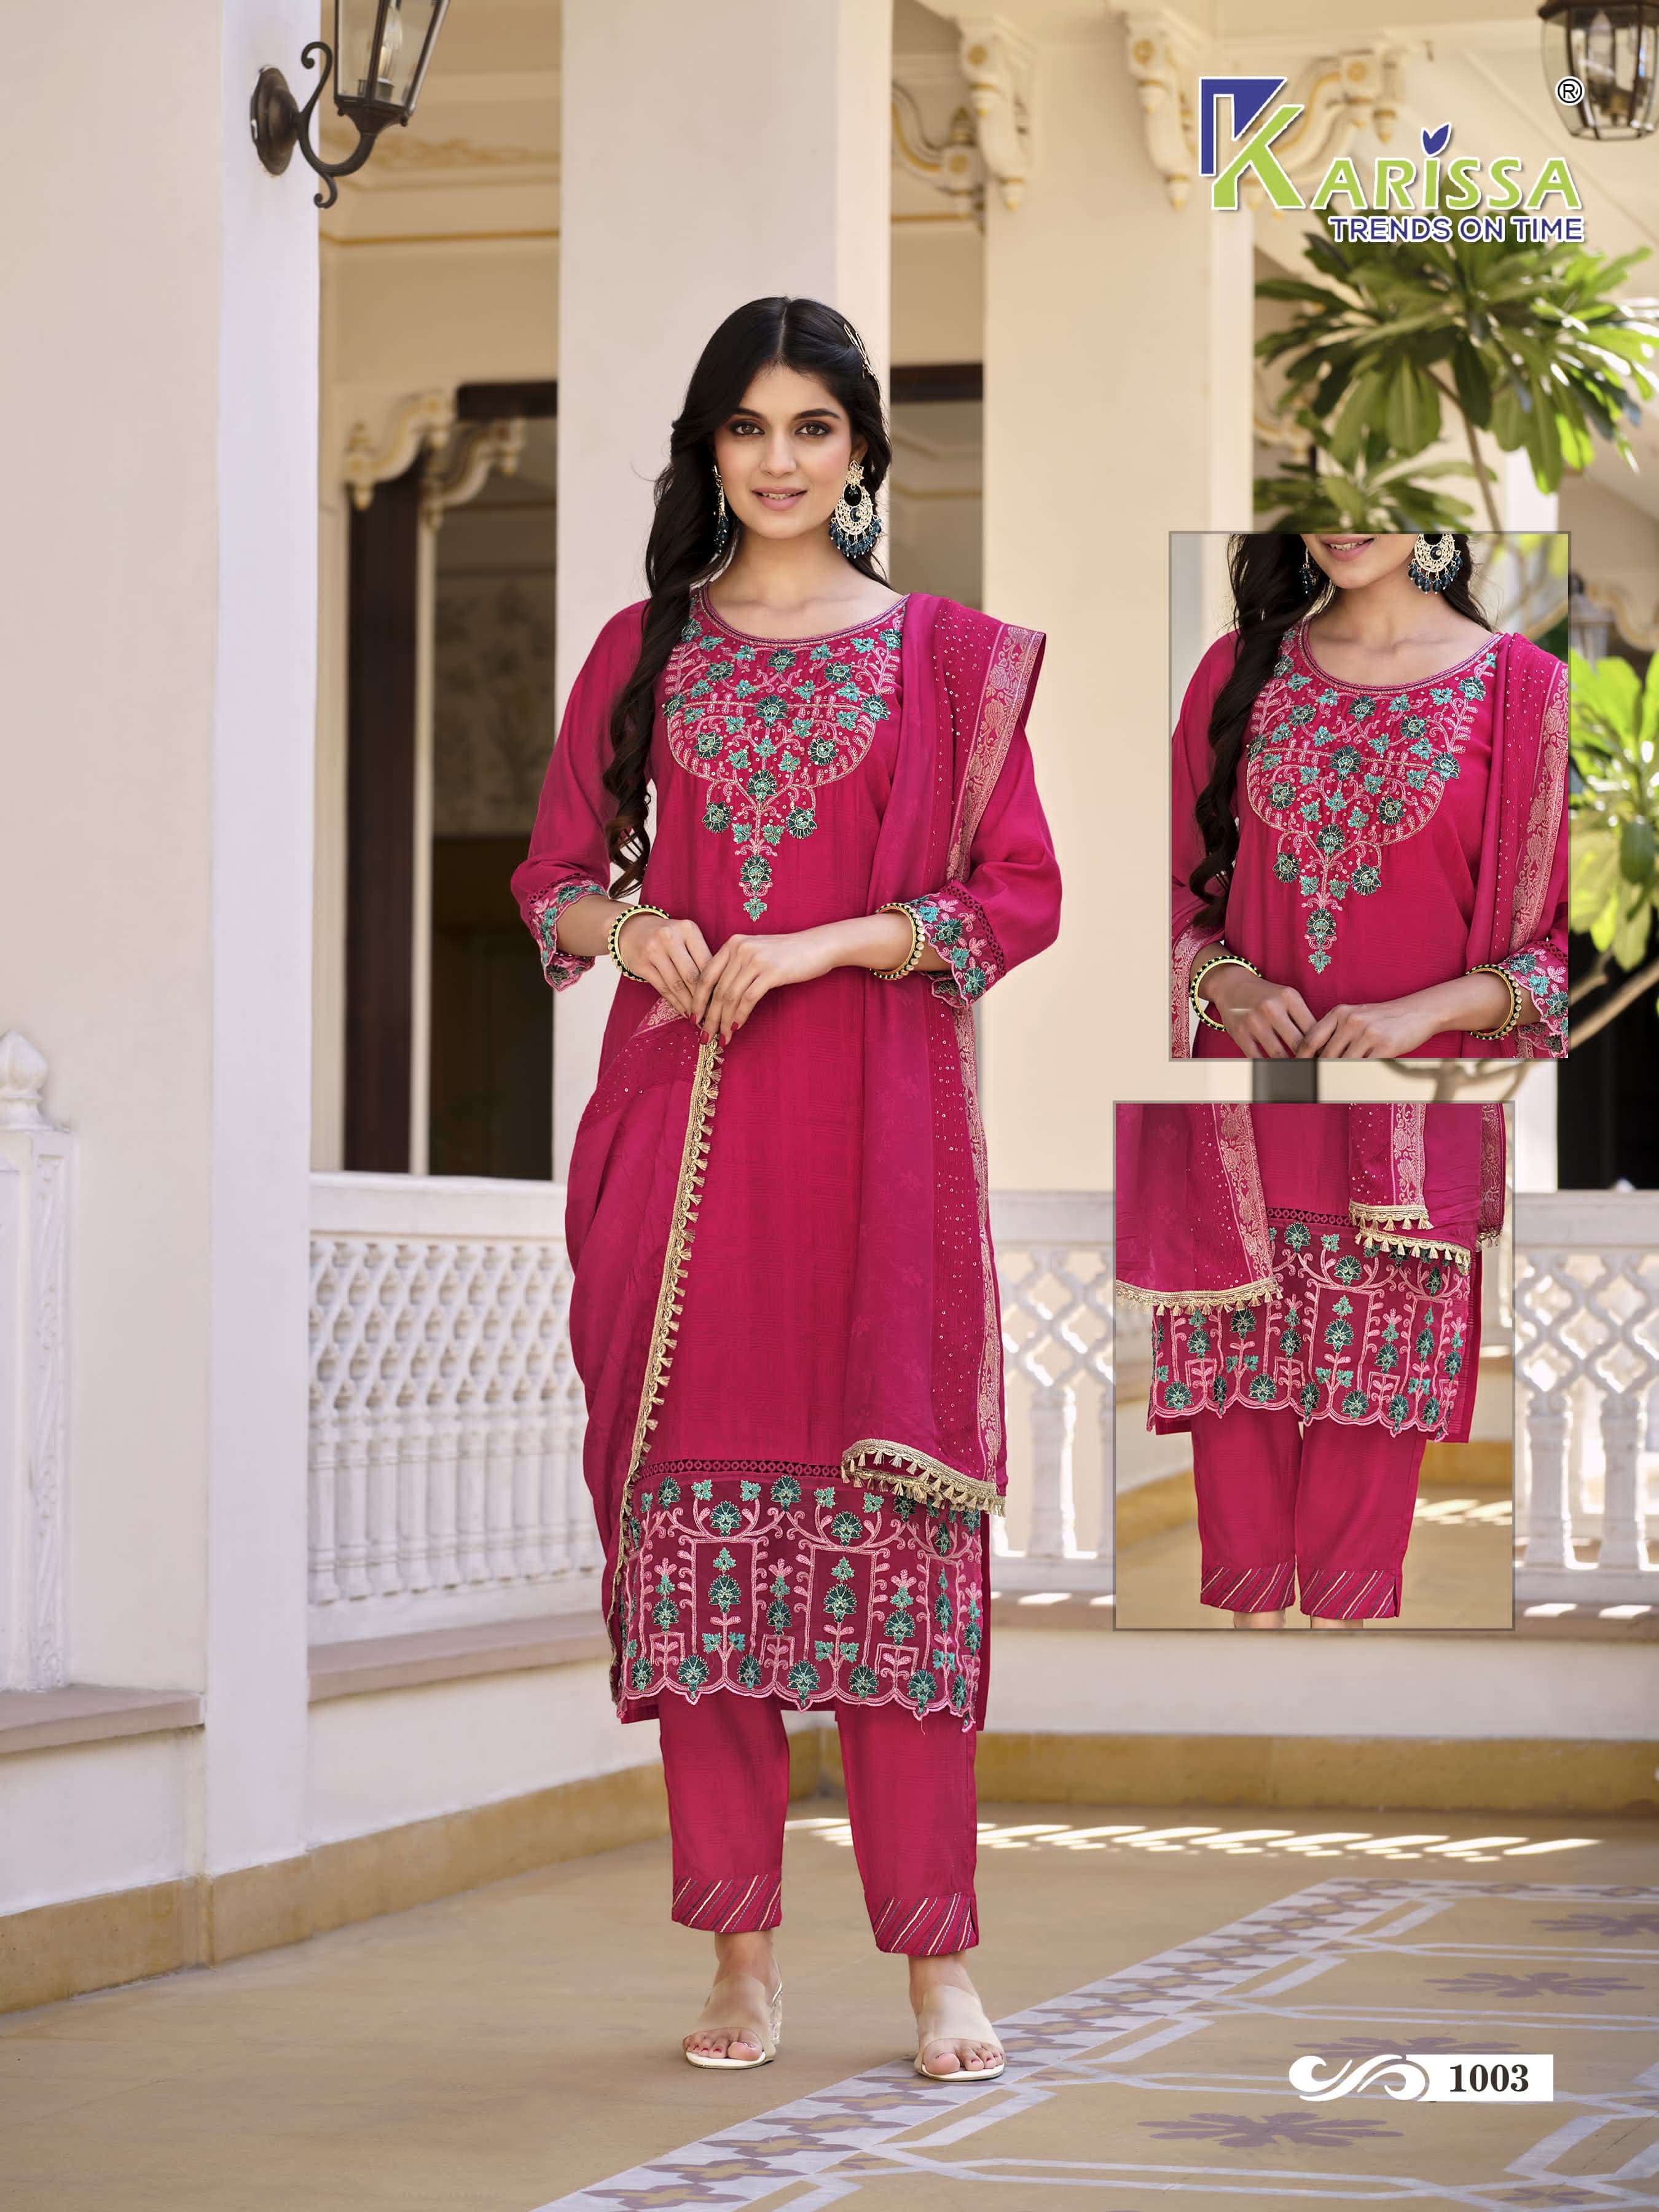 karissa trends afreen 1001-1004 series latest designer kurti set wholesaler india gujarat